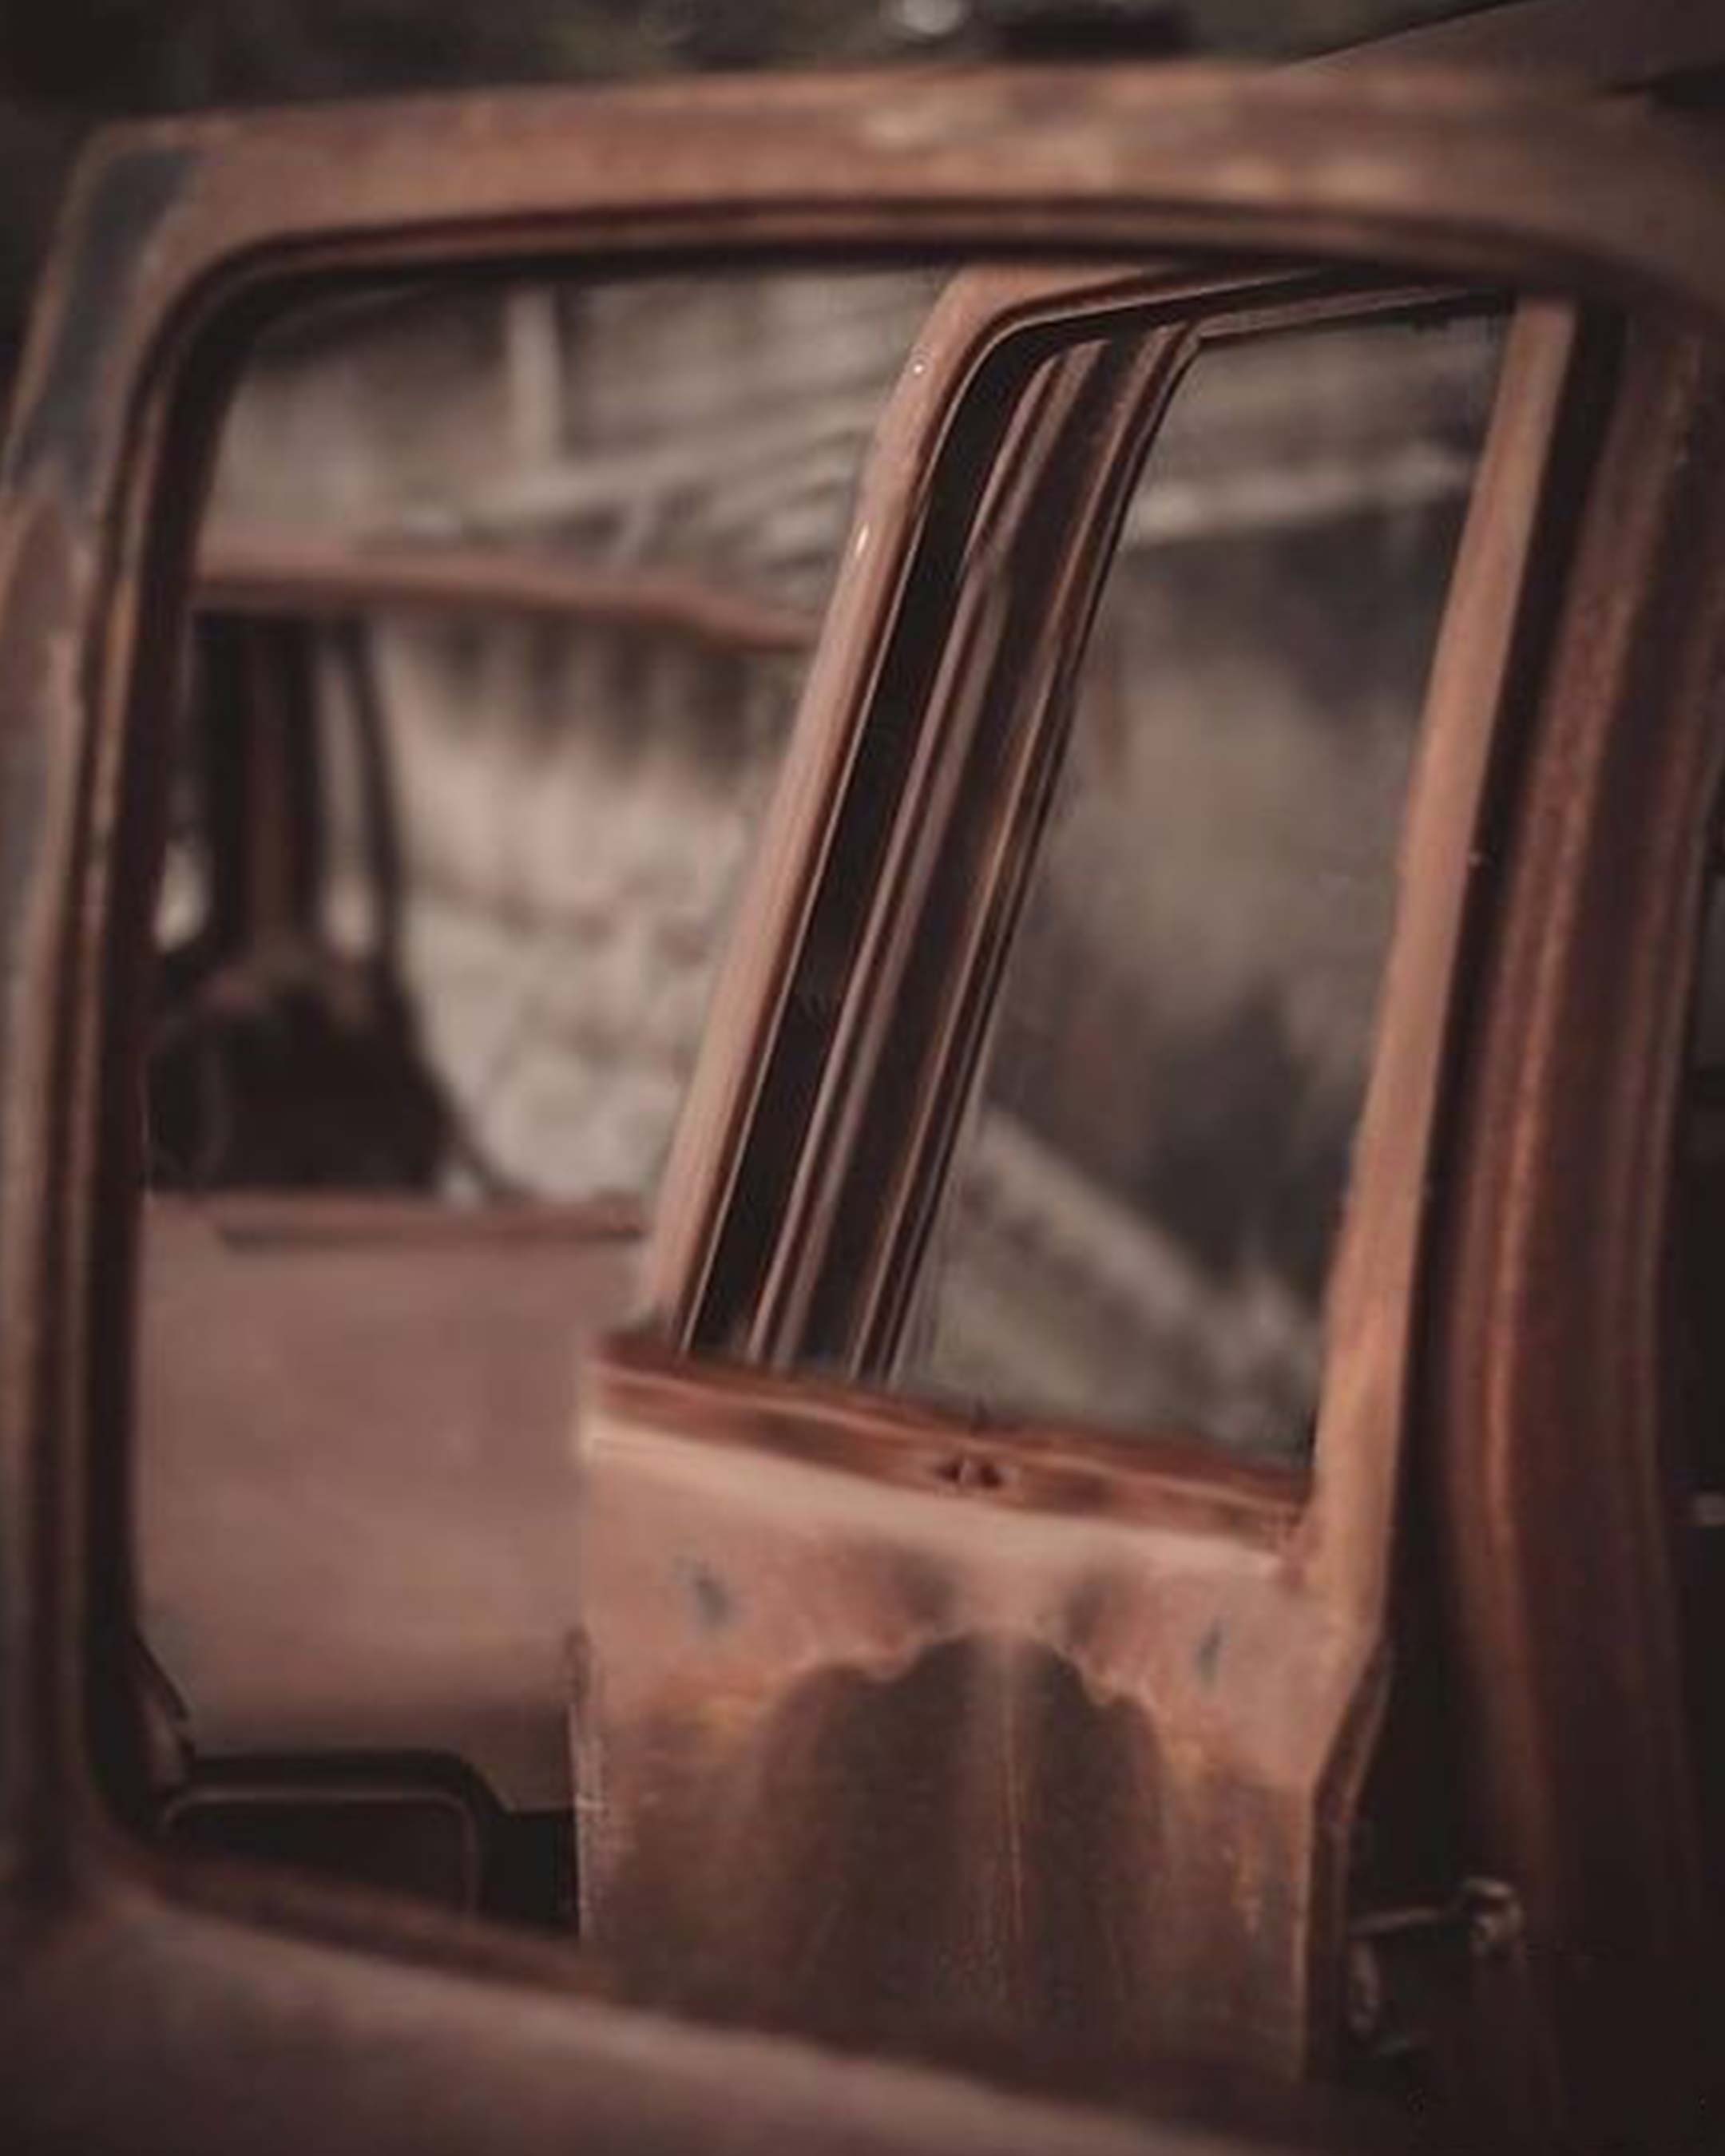 Car's Window Blur PicsArt Background Free Stock Image